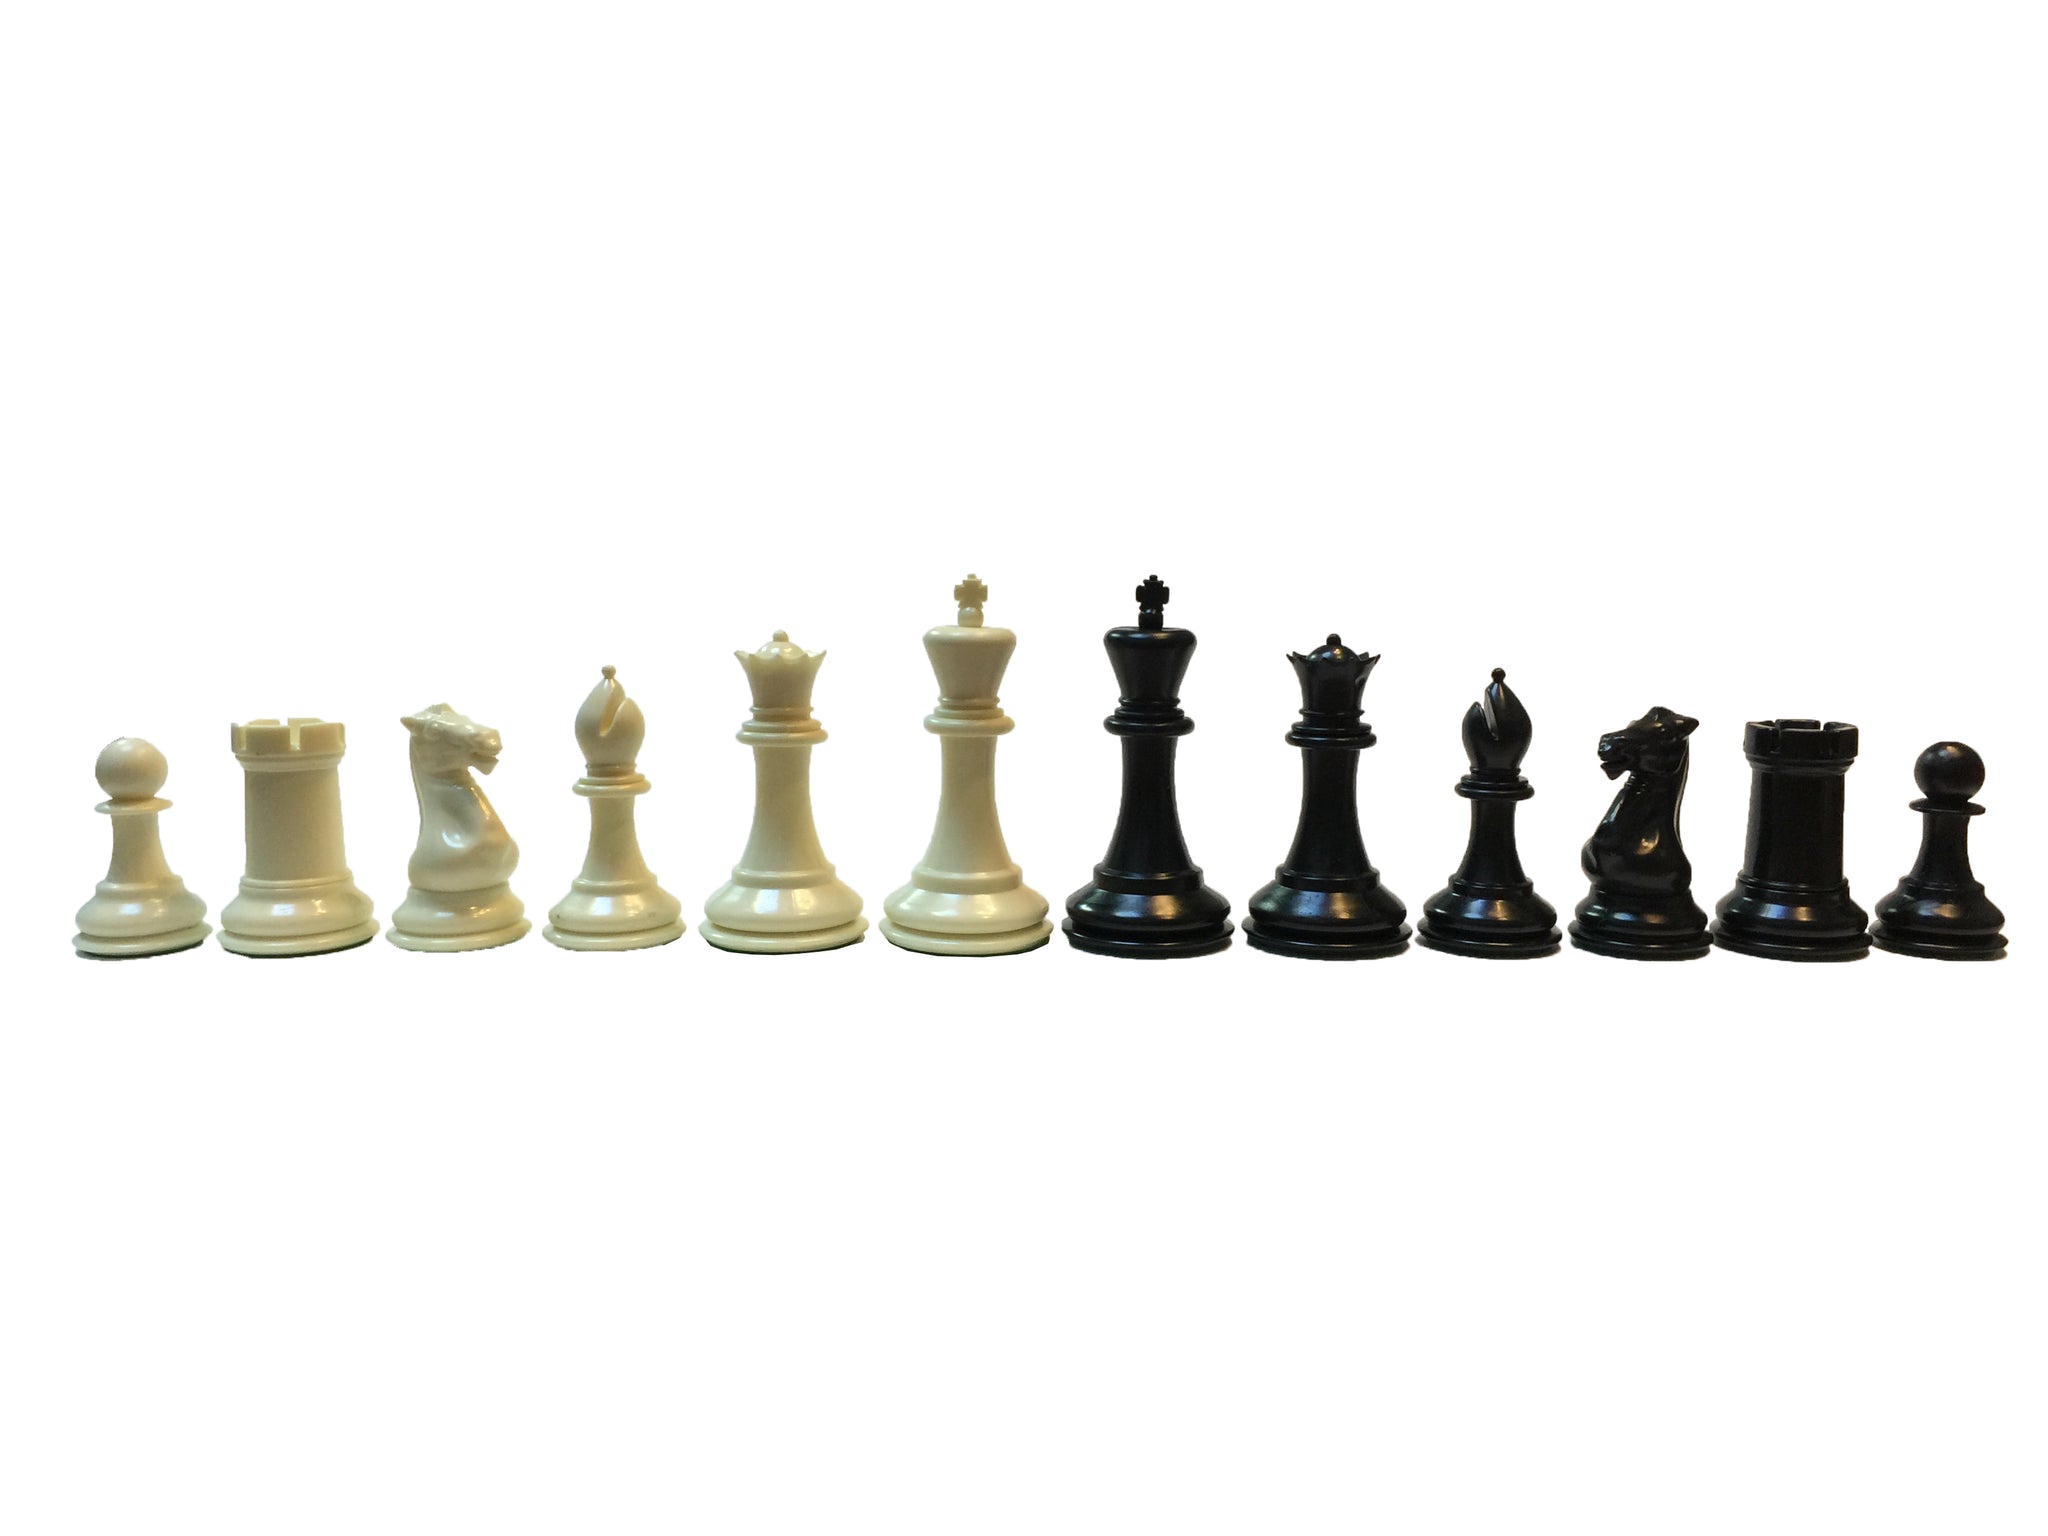 Best Value Staunton tournament chess pieces - black and cream